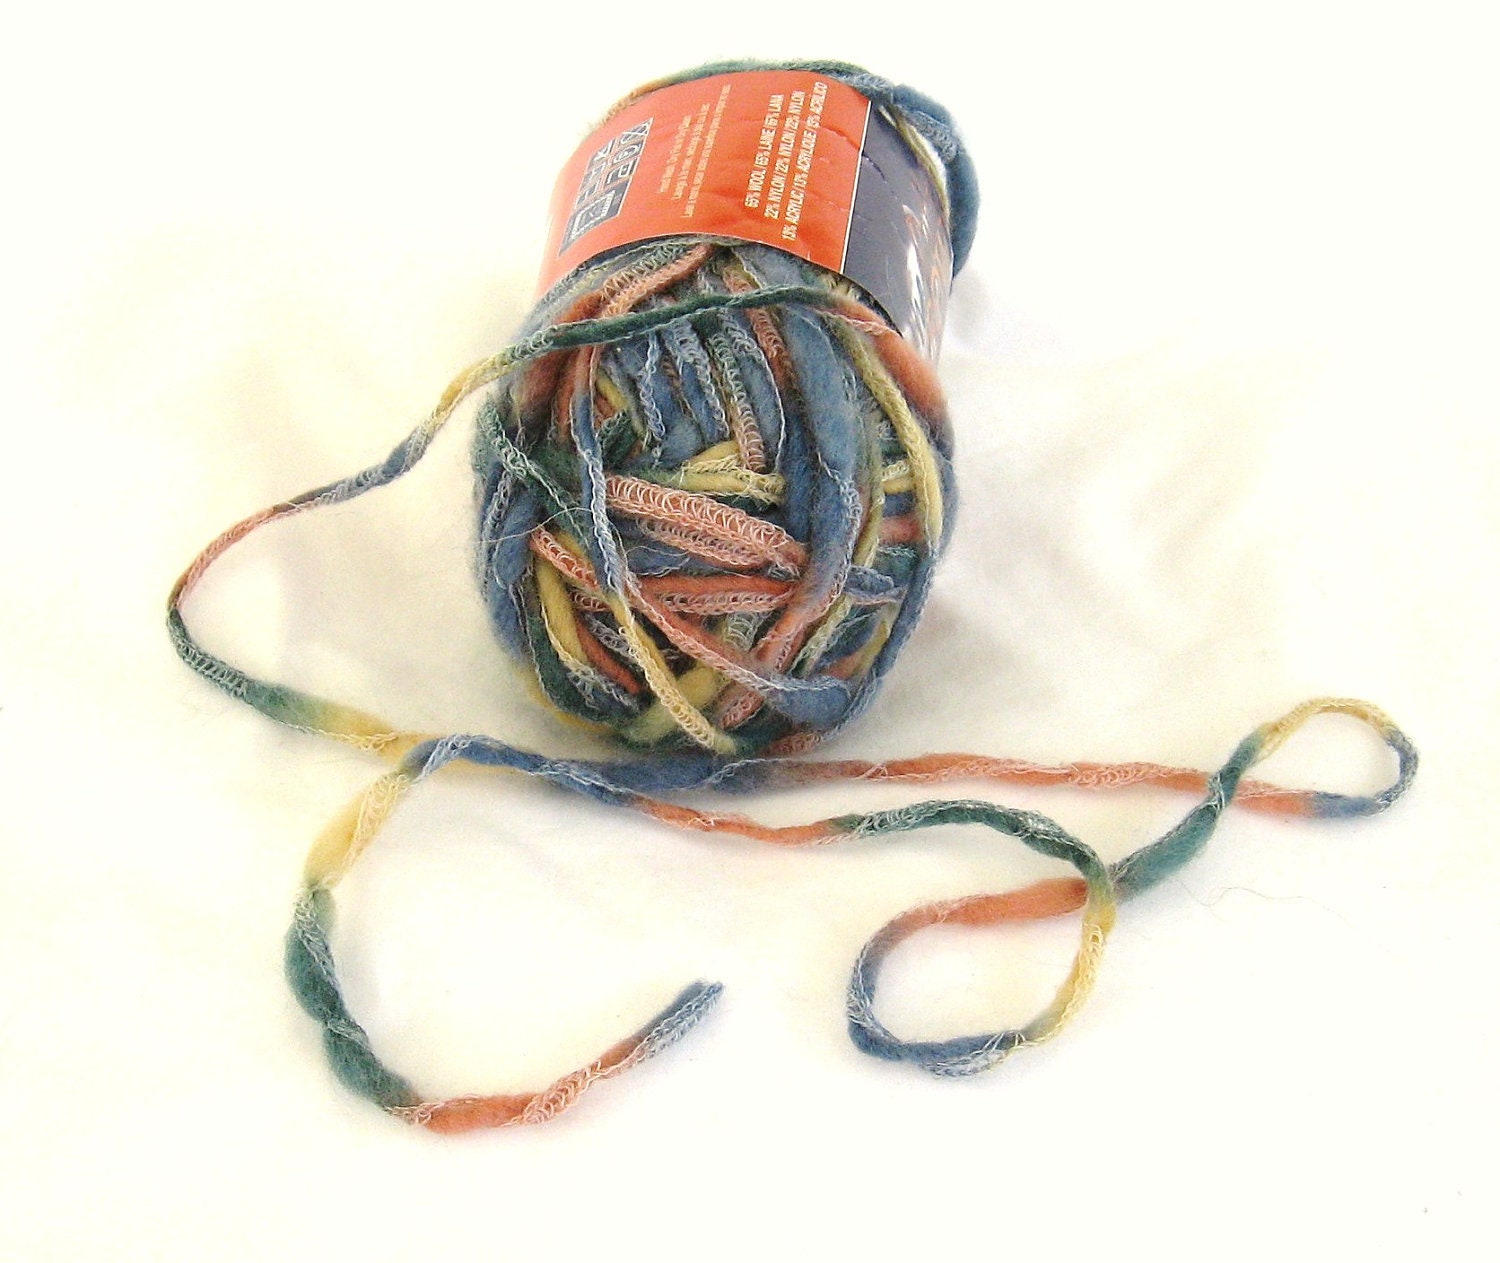 yarn, Paradiso 2116, cat's meow, multicolor, C, destash - ThreadsintheBed